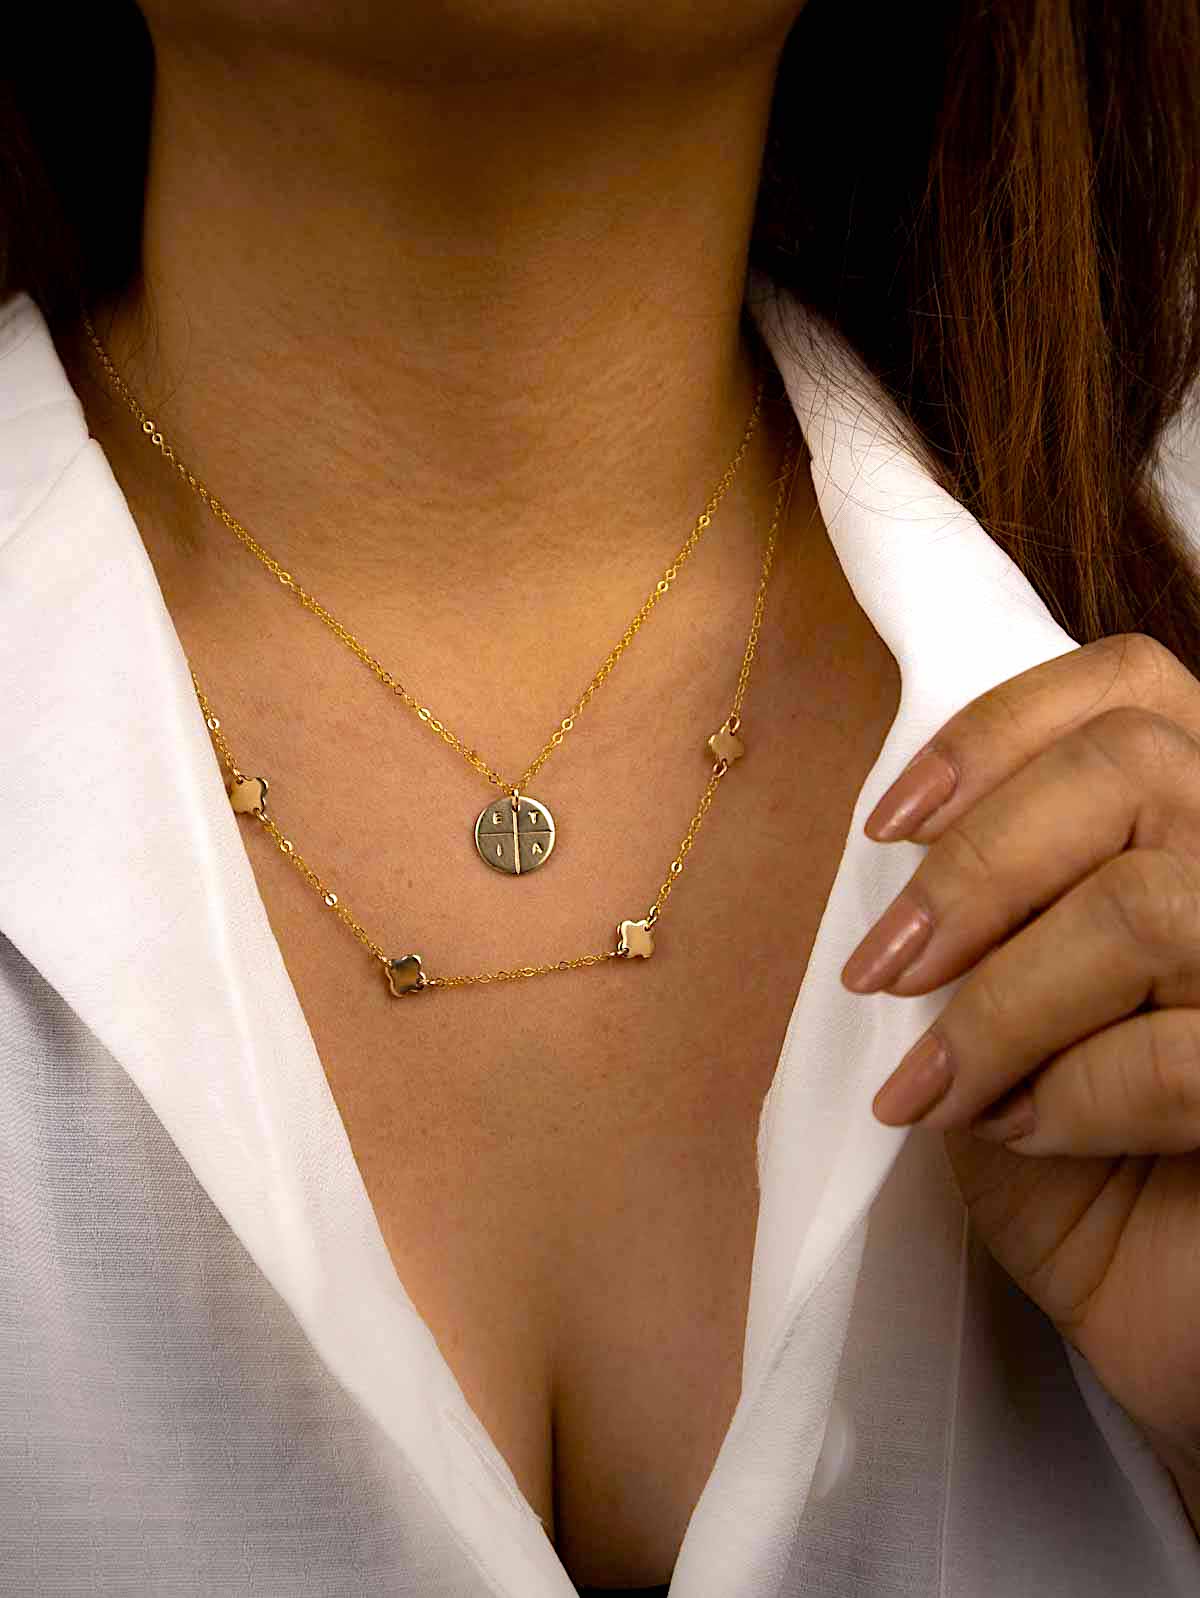 4 leaf clover pendants necklace in gold on neck